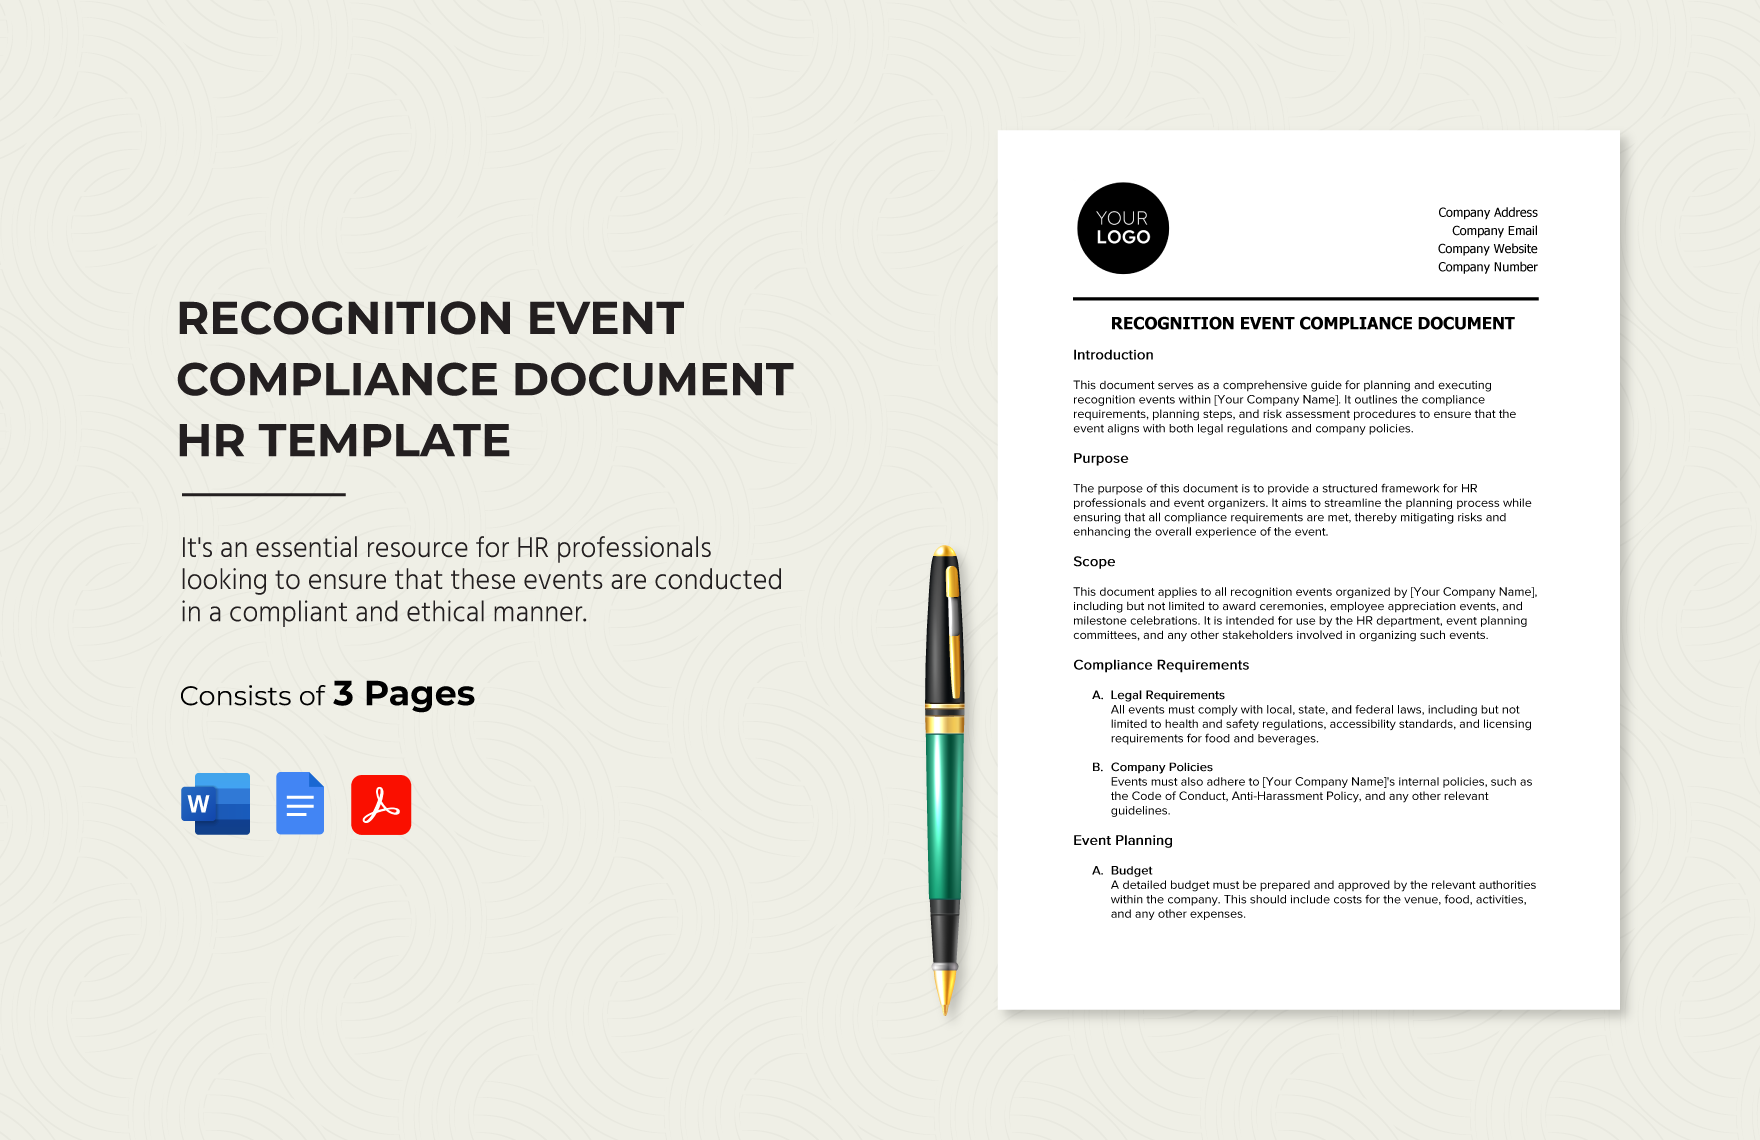 Recognition Event Compliance Document HR Template